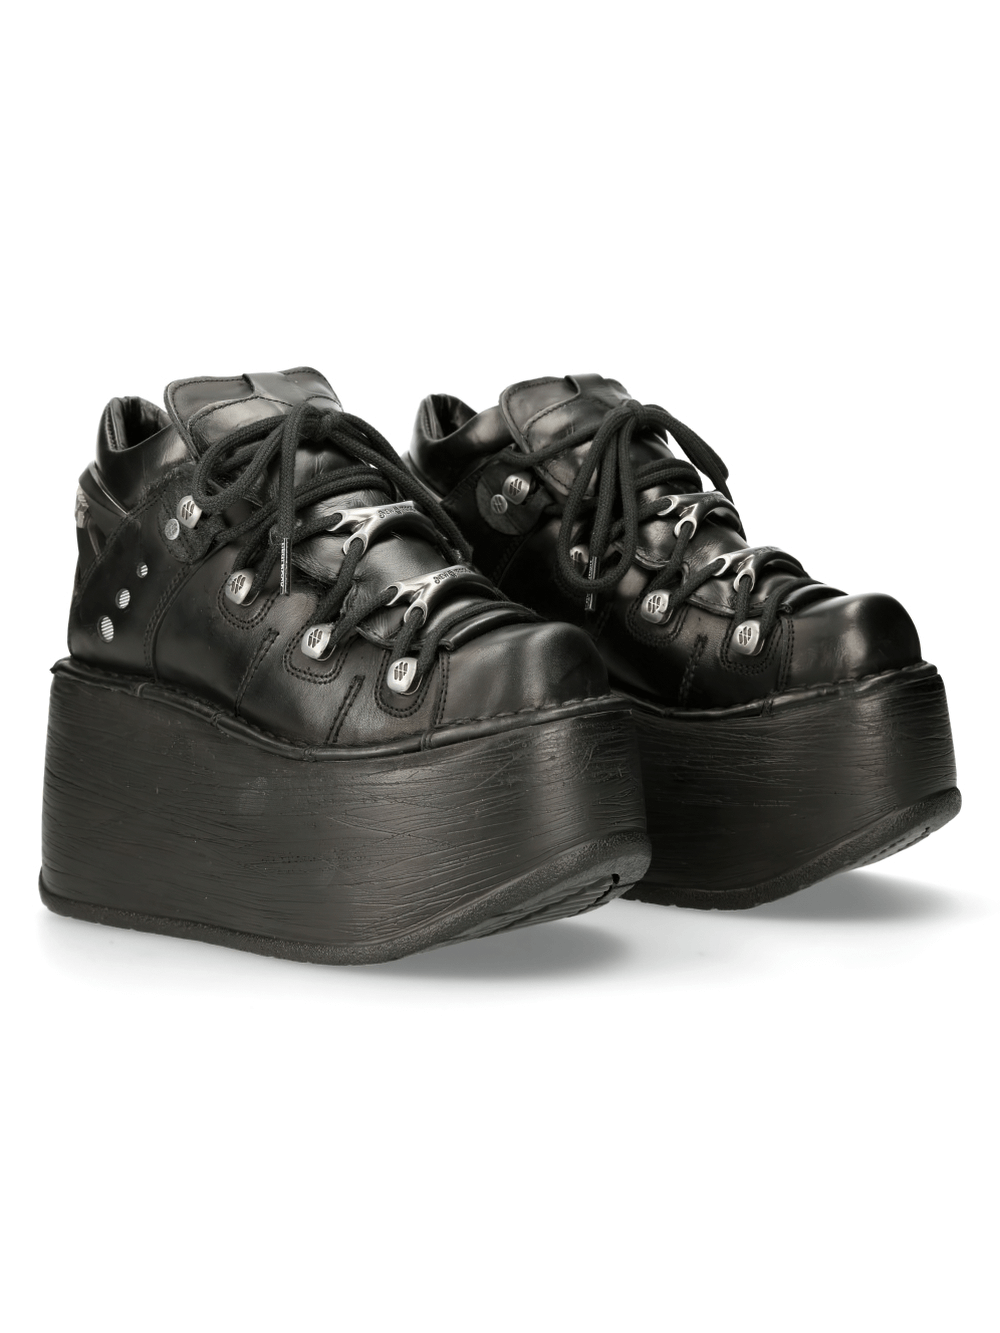 NEW ROCK Black Leather Punk Platform Ankle Boots